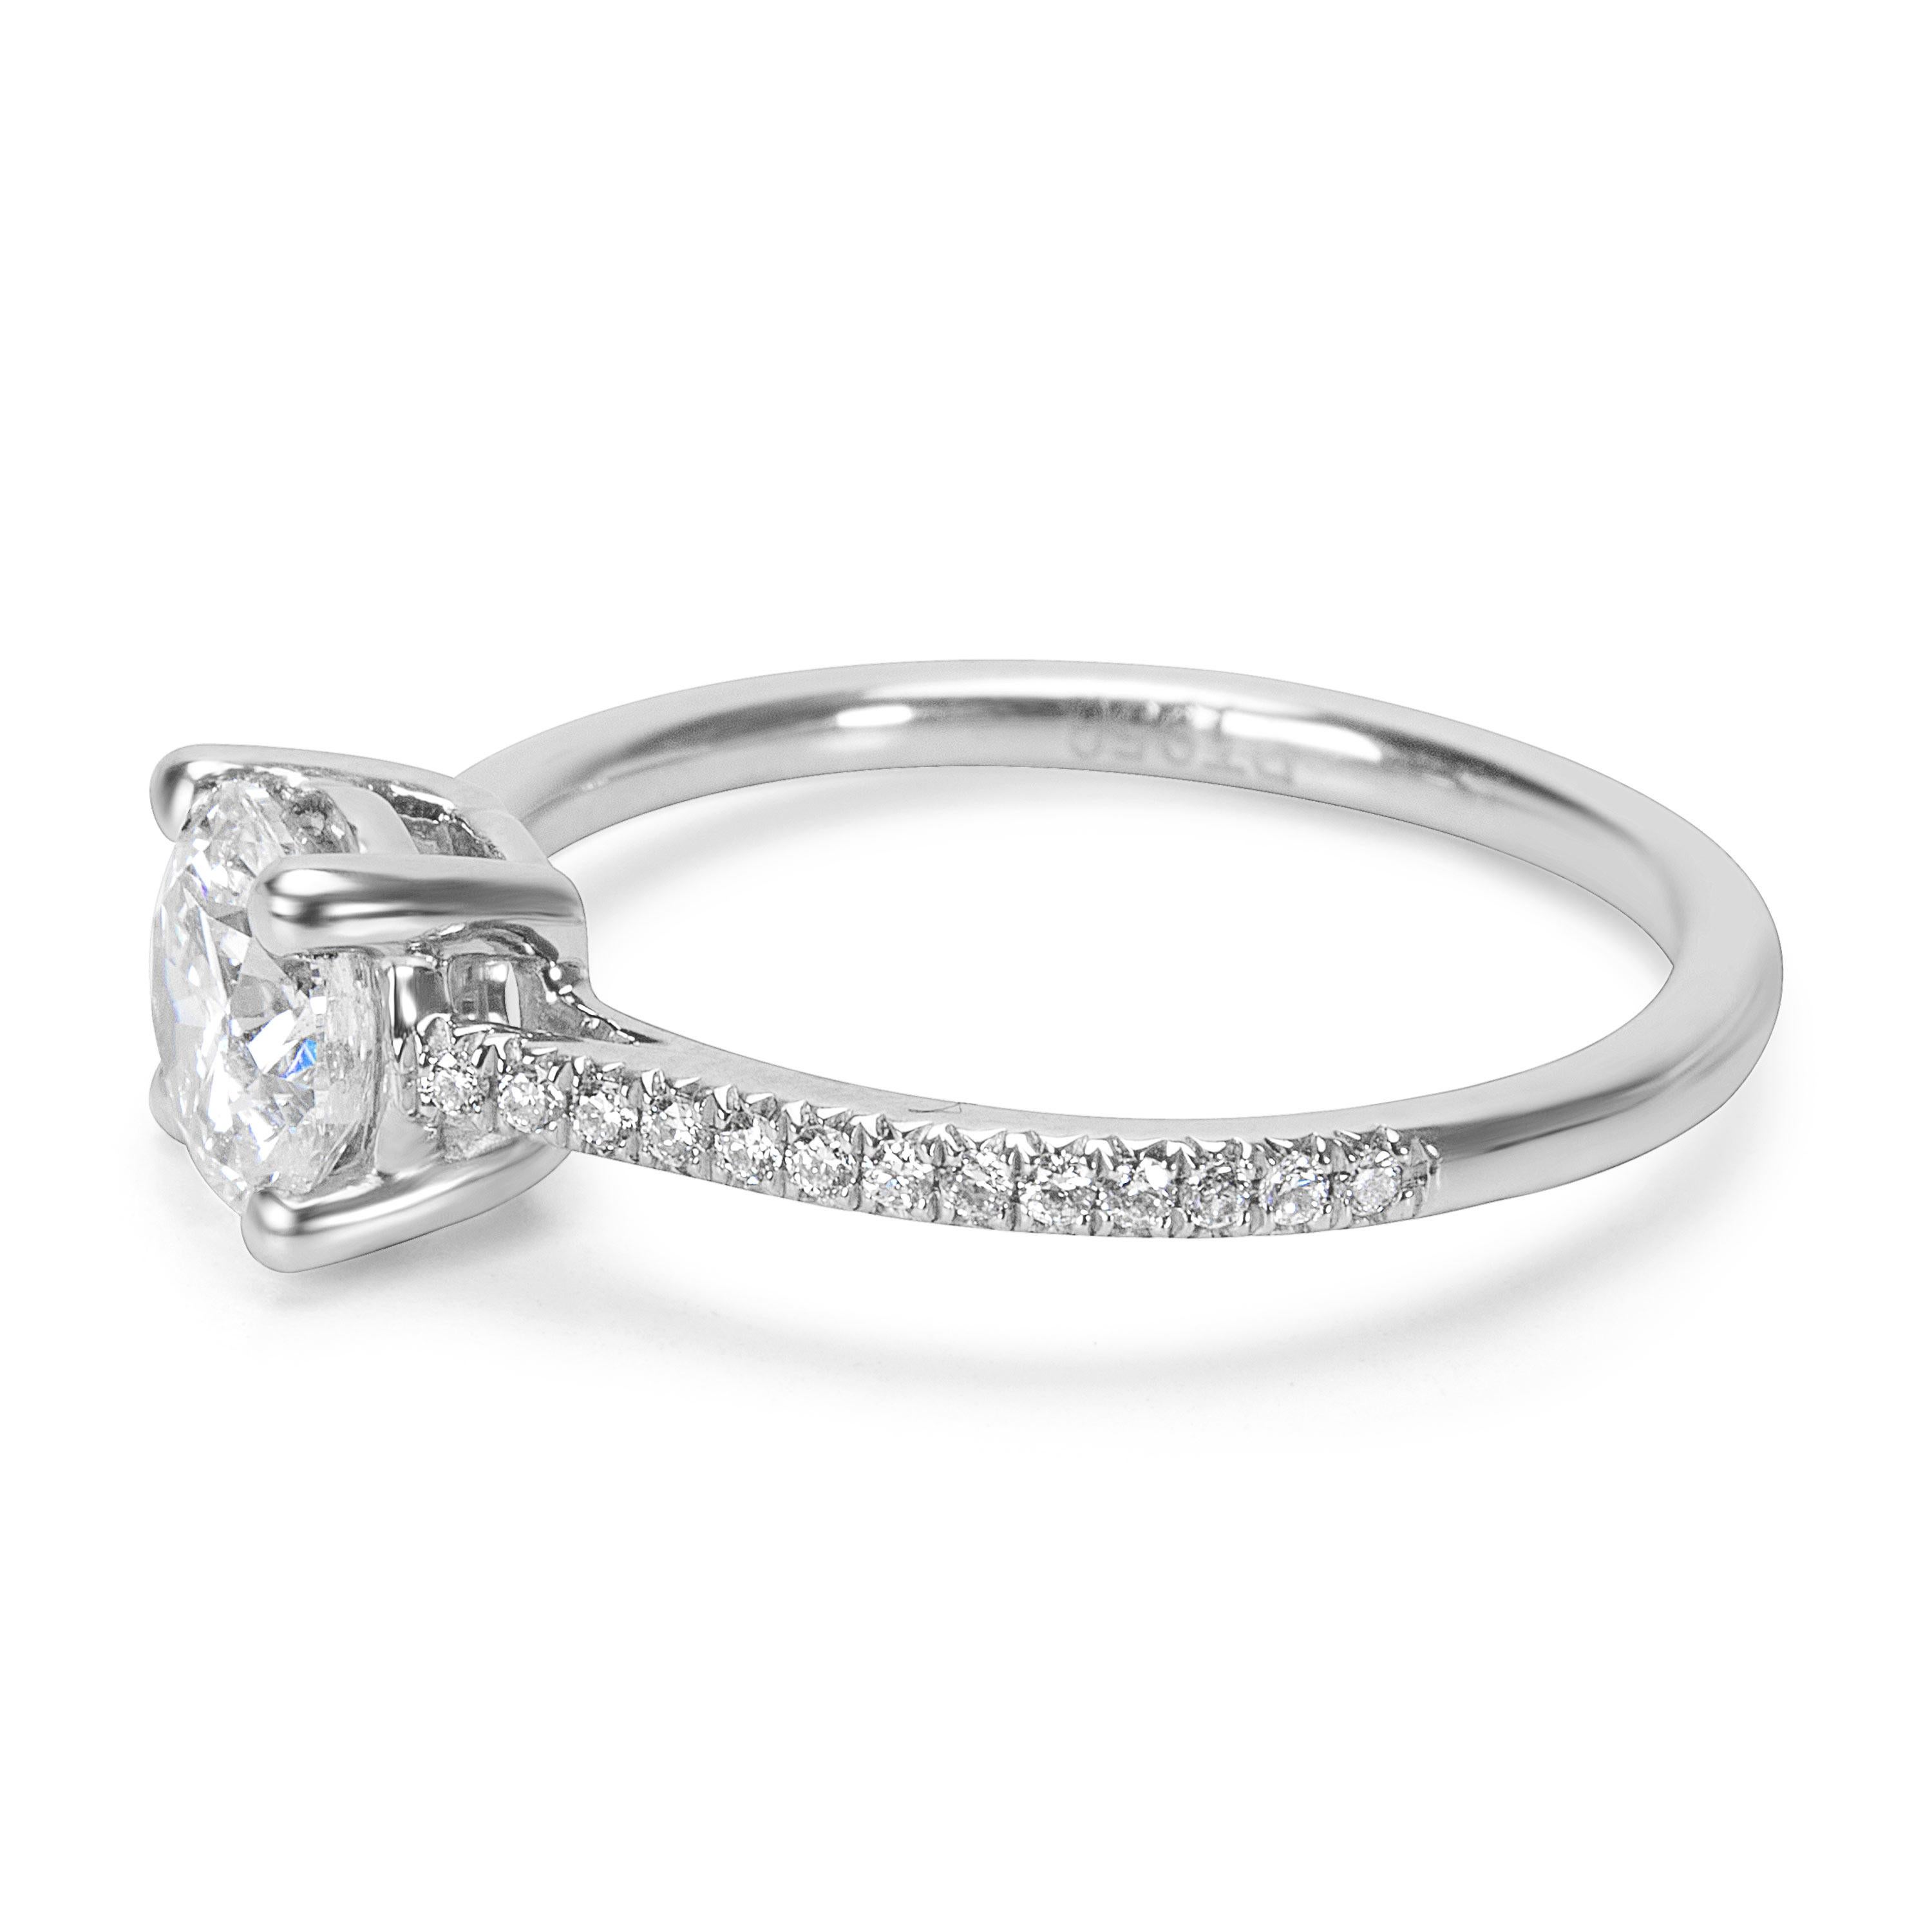 Women's Round Cut Diamond Engagement Ring Set in Platinum 1.20 Carat